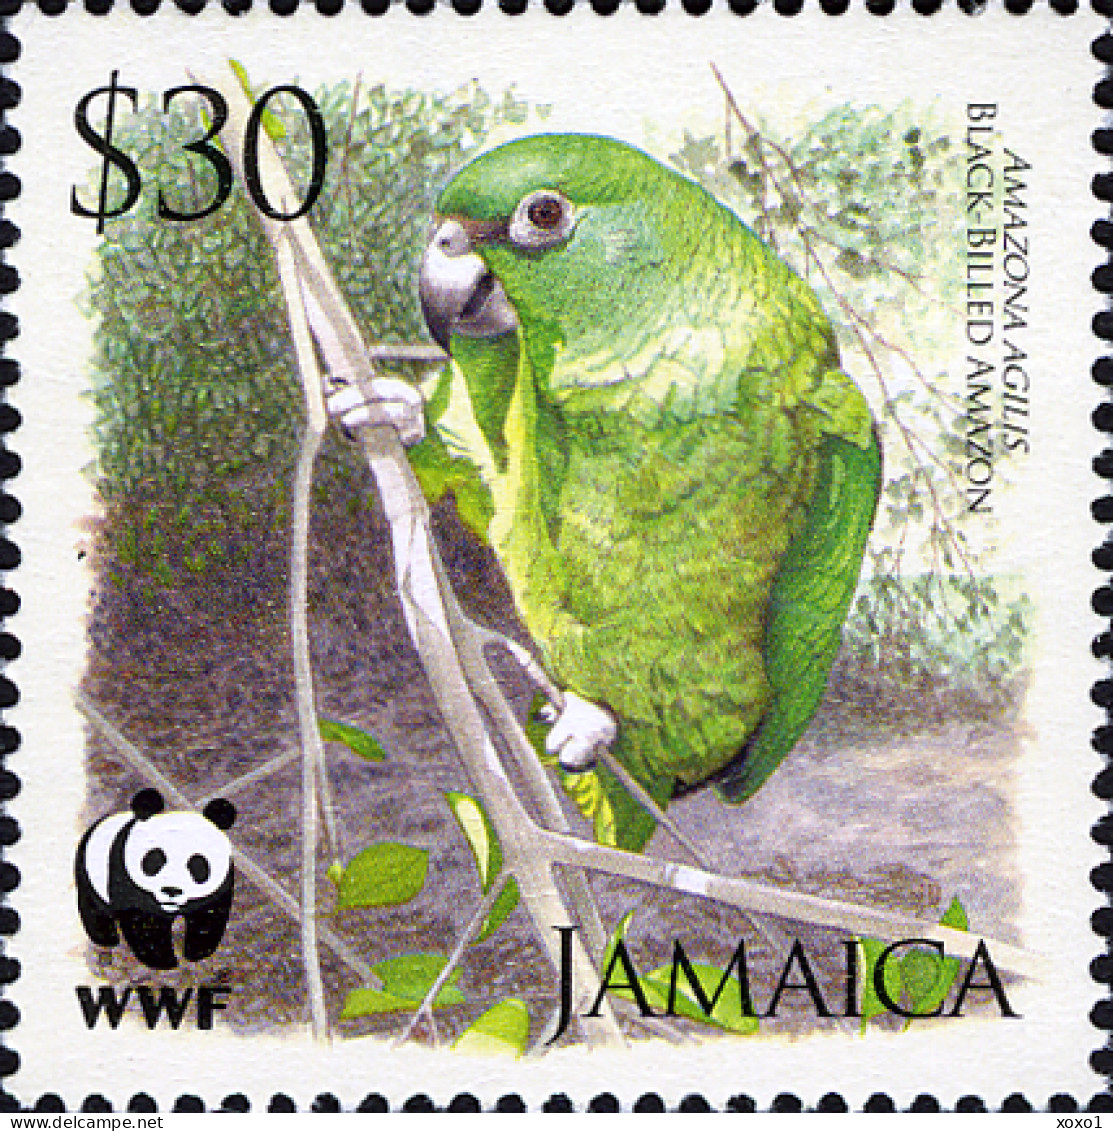 Jamaica 2006 MiNr. 1122 - 1125 Jamaika WWF Birds, Parrots, Black-billed Amazon 4v MNH** 3.20 € - Papageien